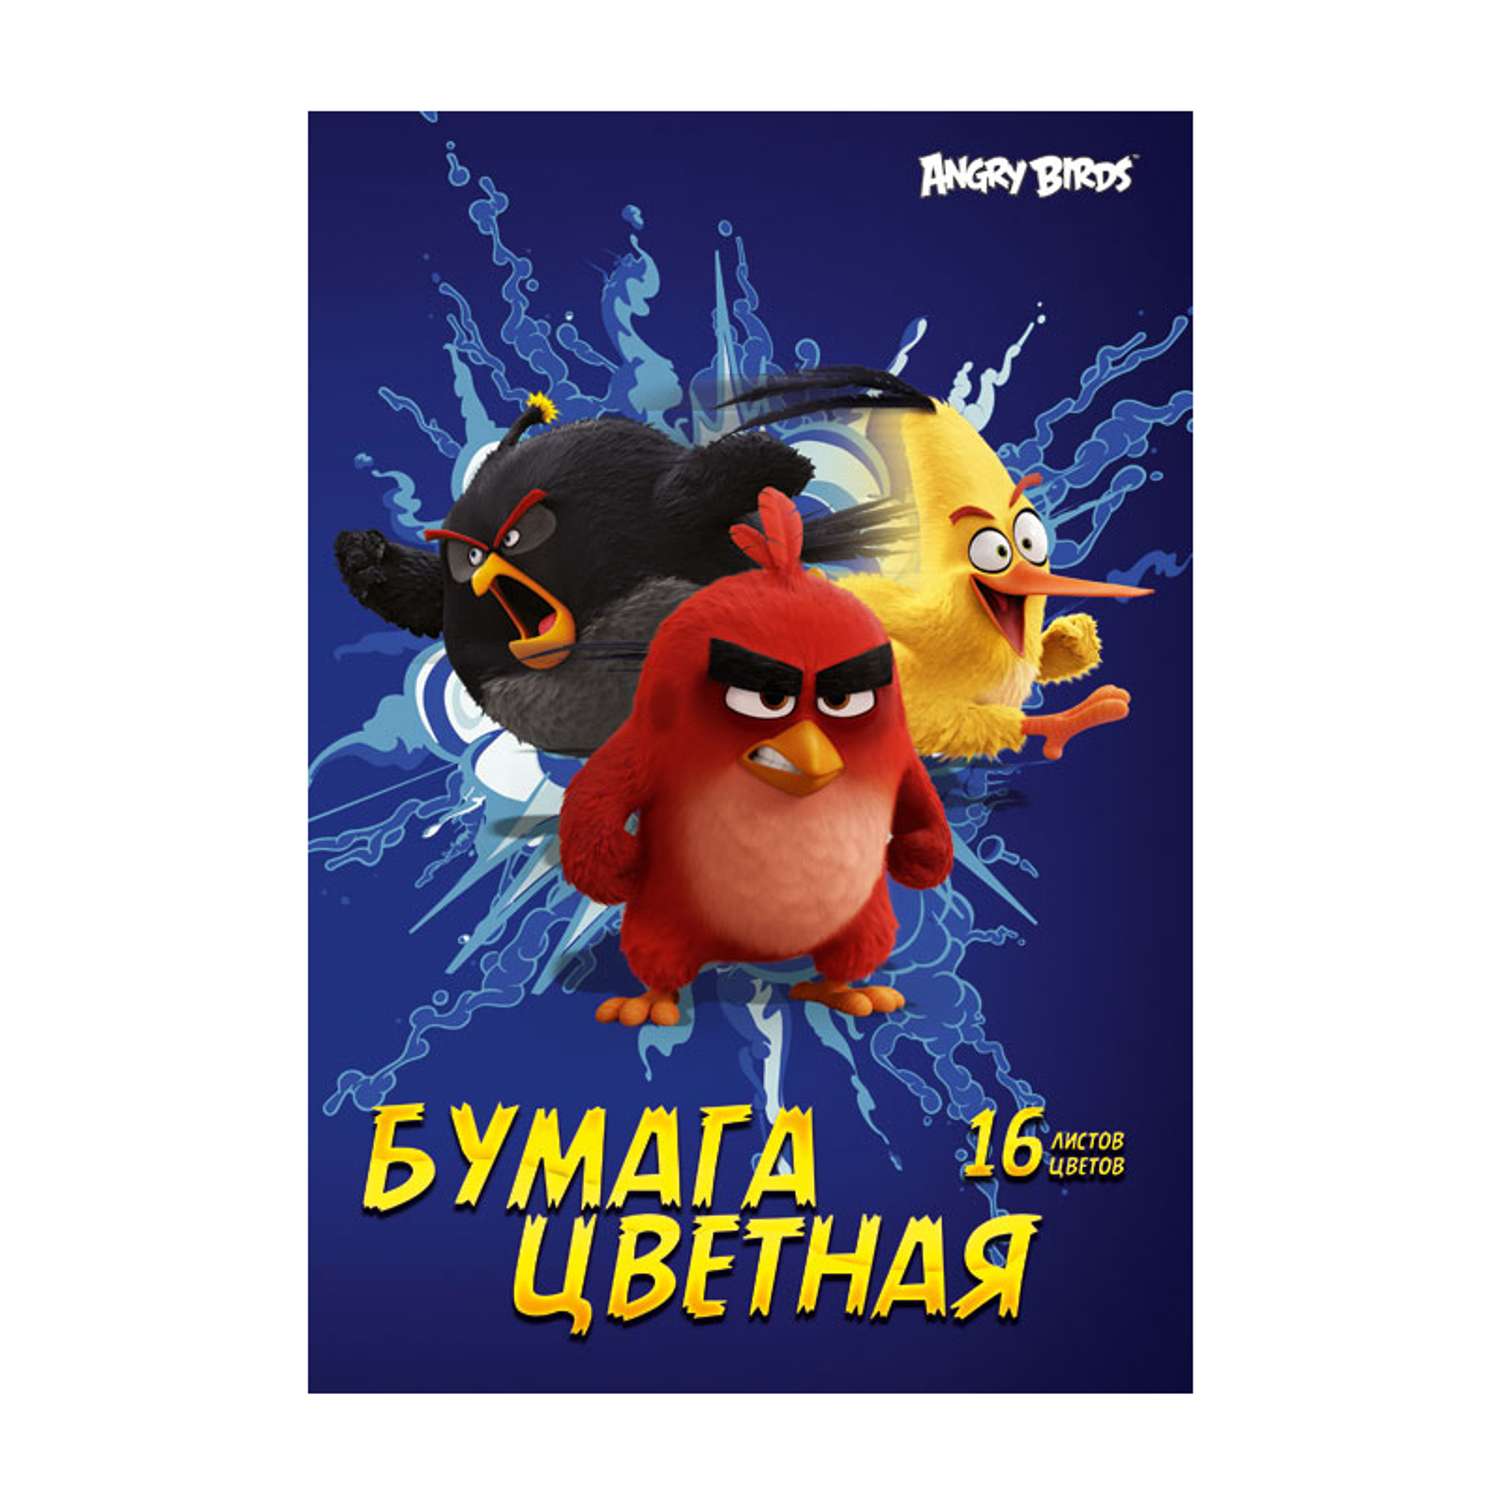 Цветная бумага Академия Холдинг 16ц. 16л. Angry Birds - фото 1